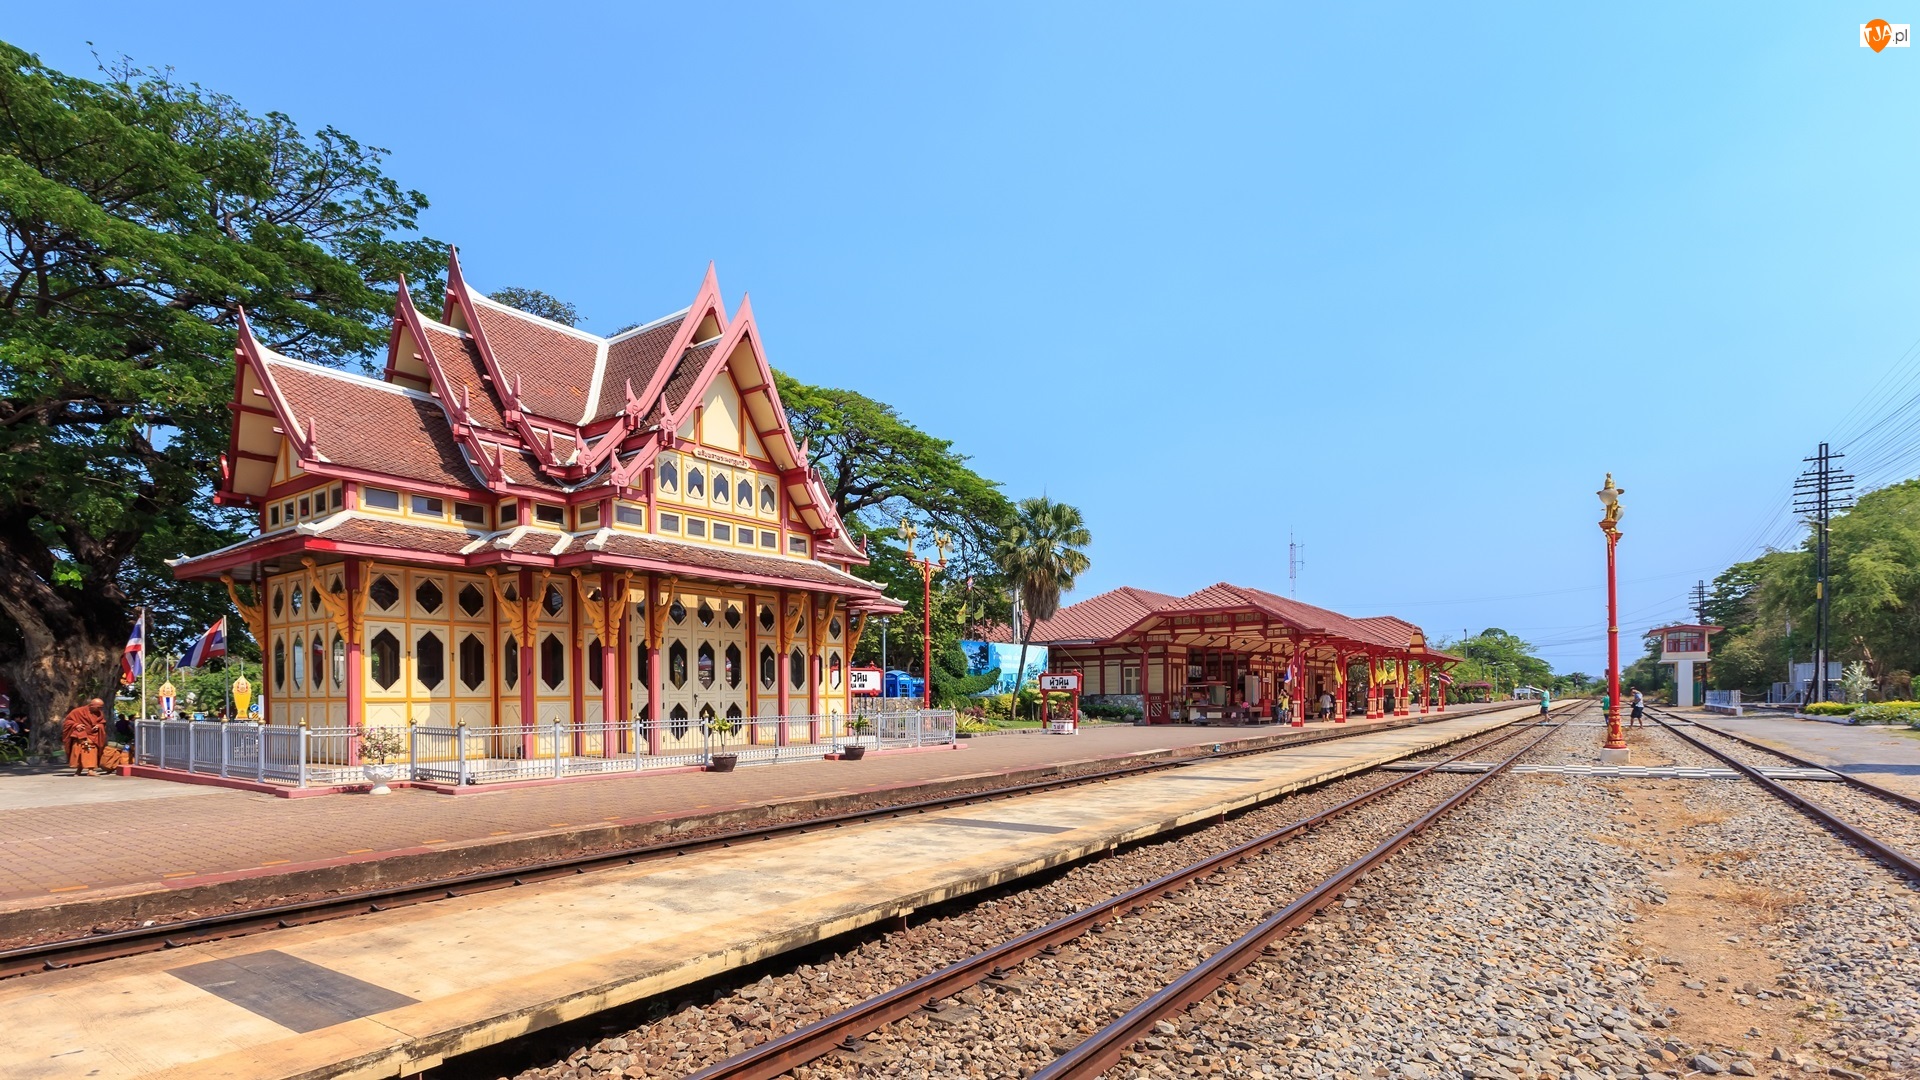 Dom, Tory kolejowe, Tajlandia, Stacja kolejowa, Prachuap Khiri Khan, Hua Hin, Drzewa